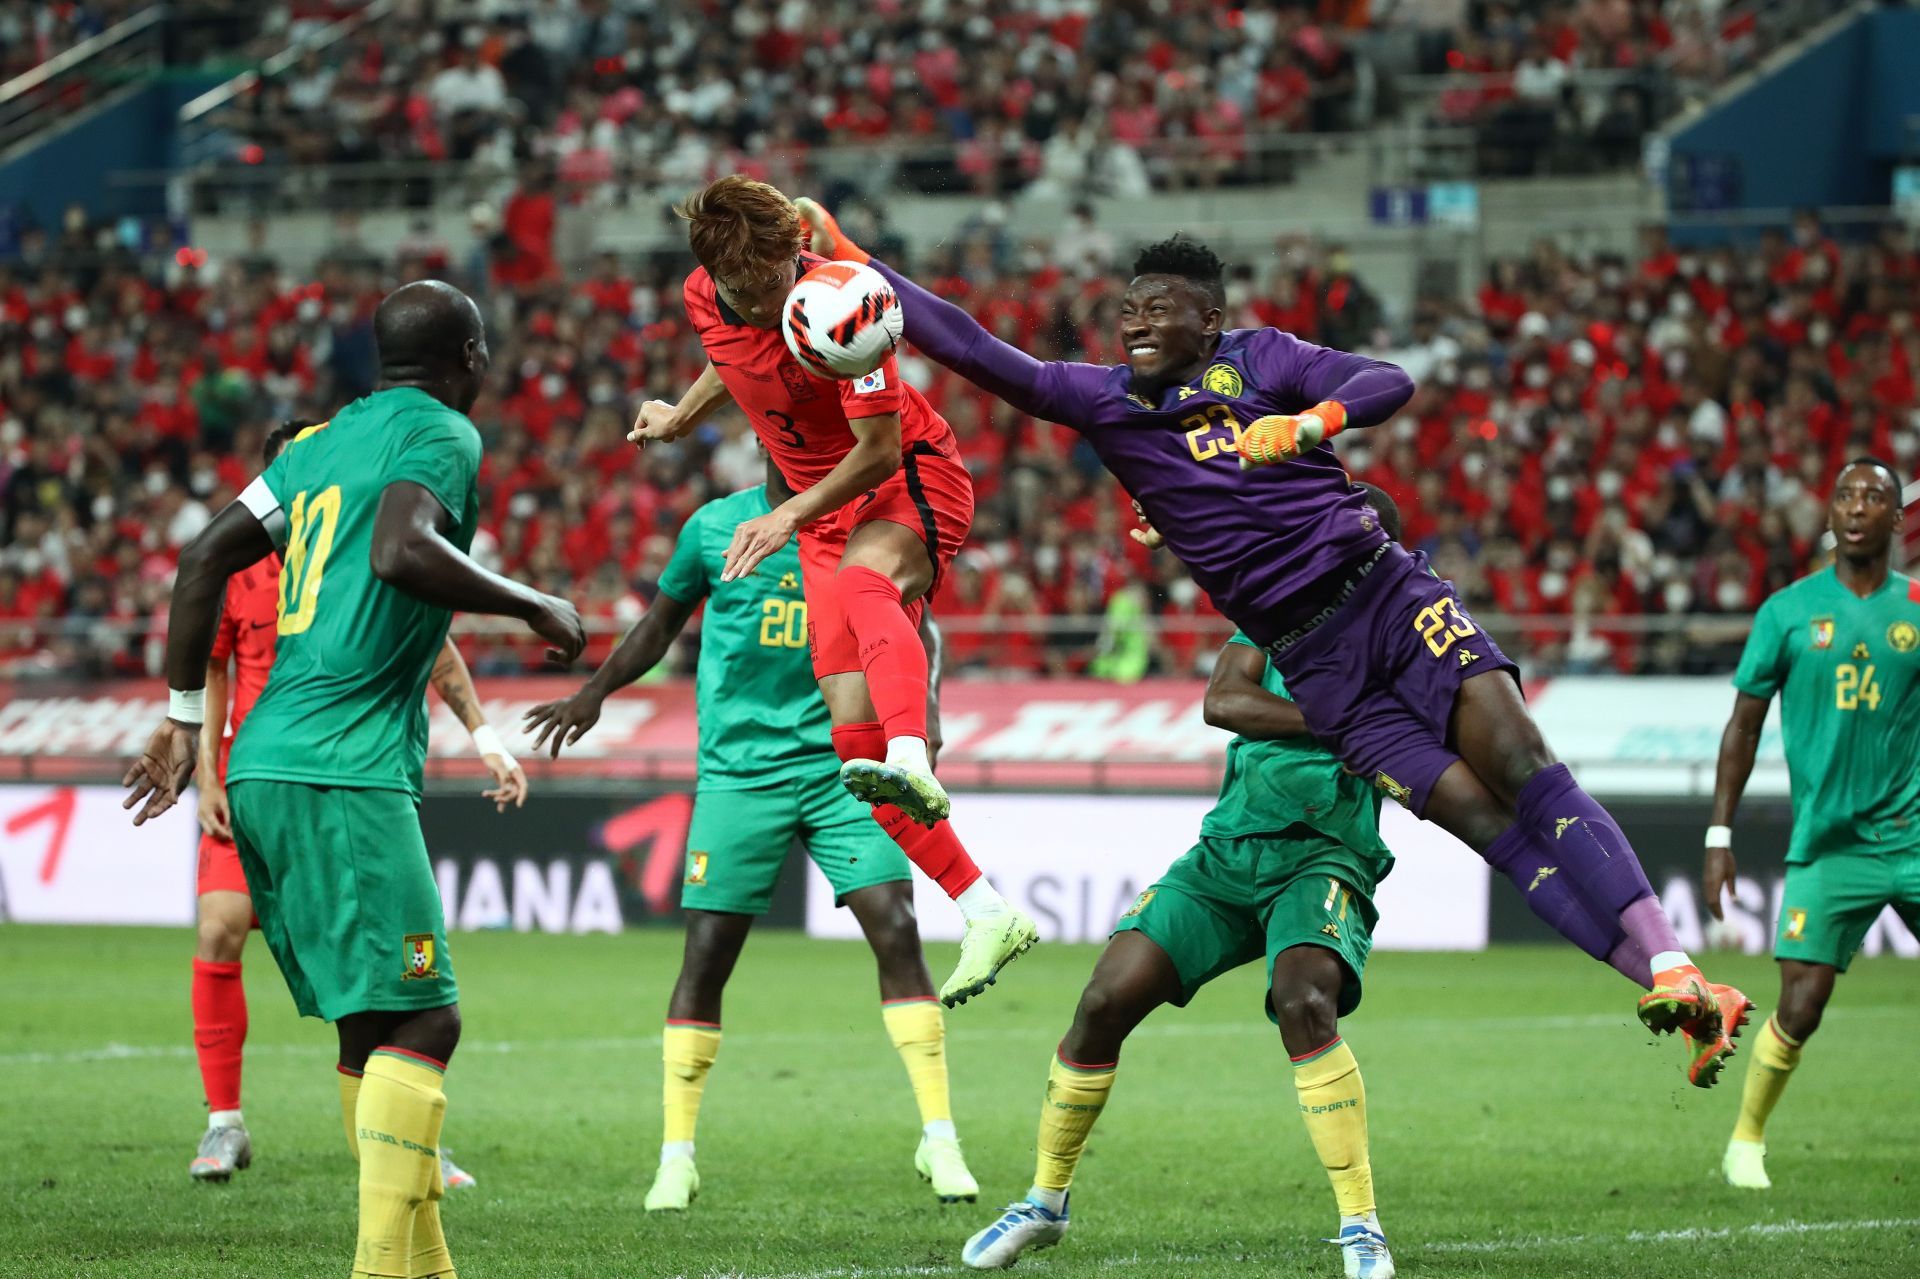 South Korea v Cameroon - International Friendly